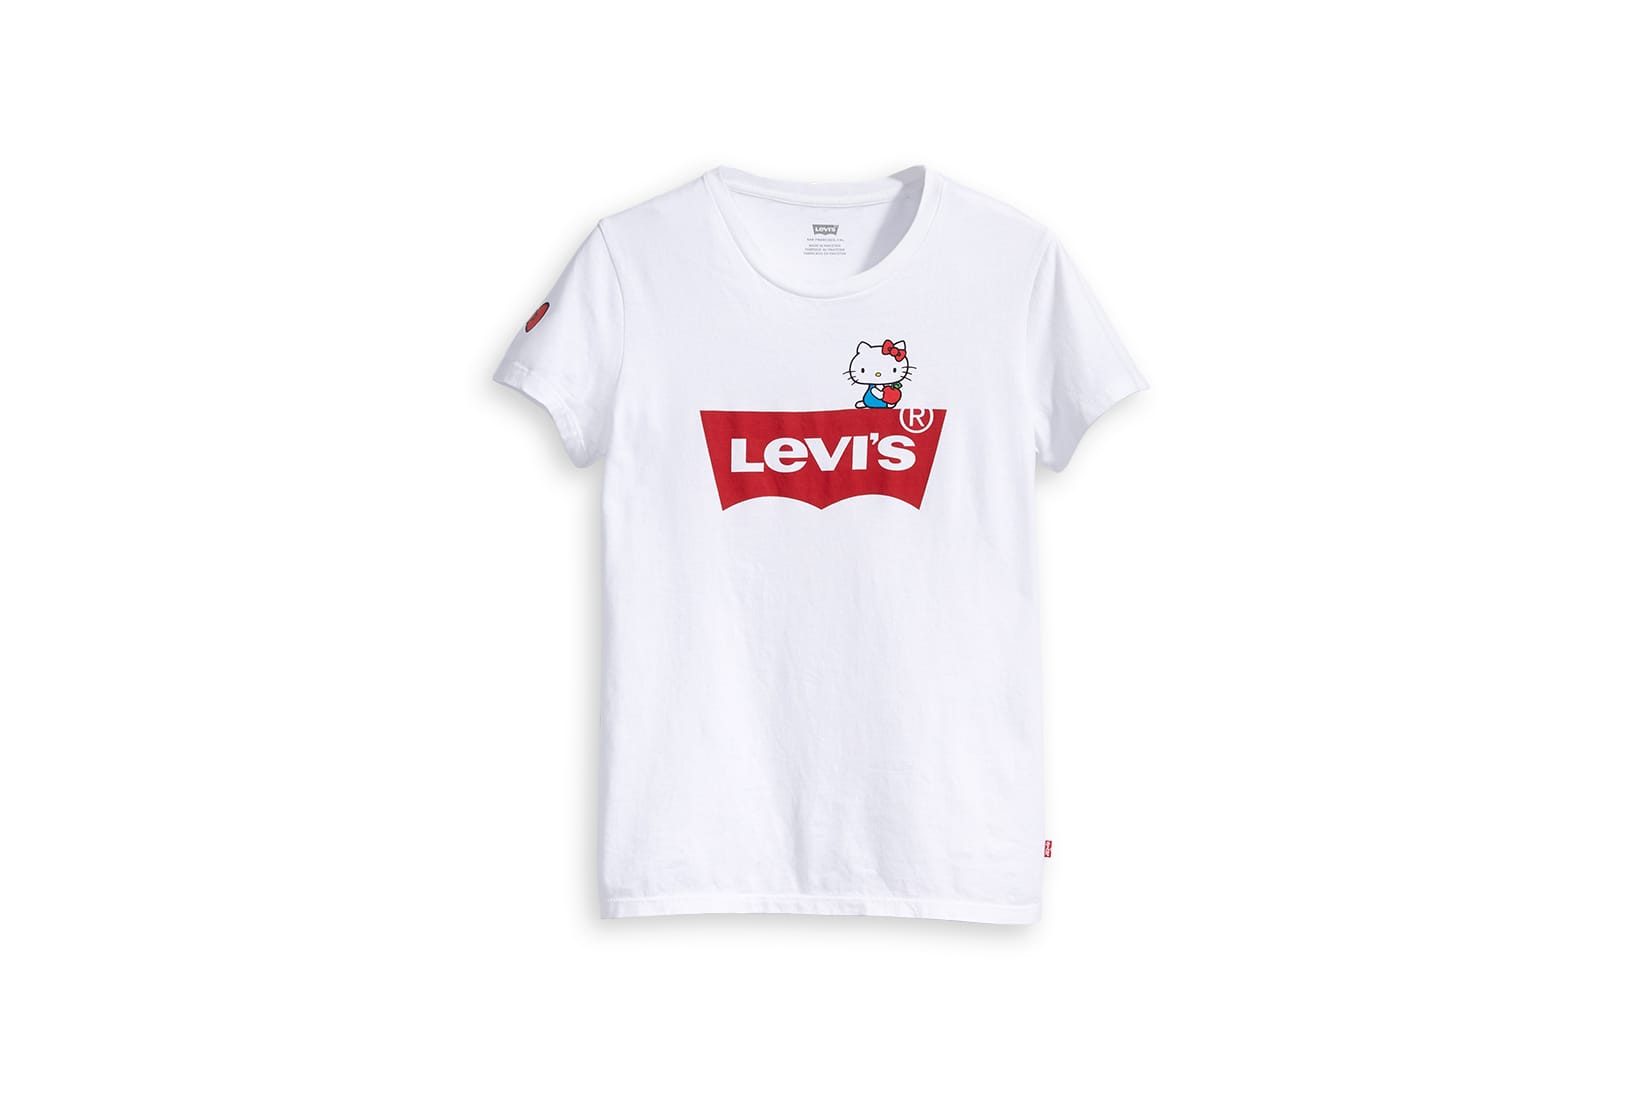 levis hello kitty t shirt